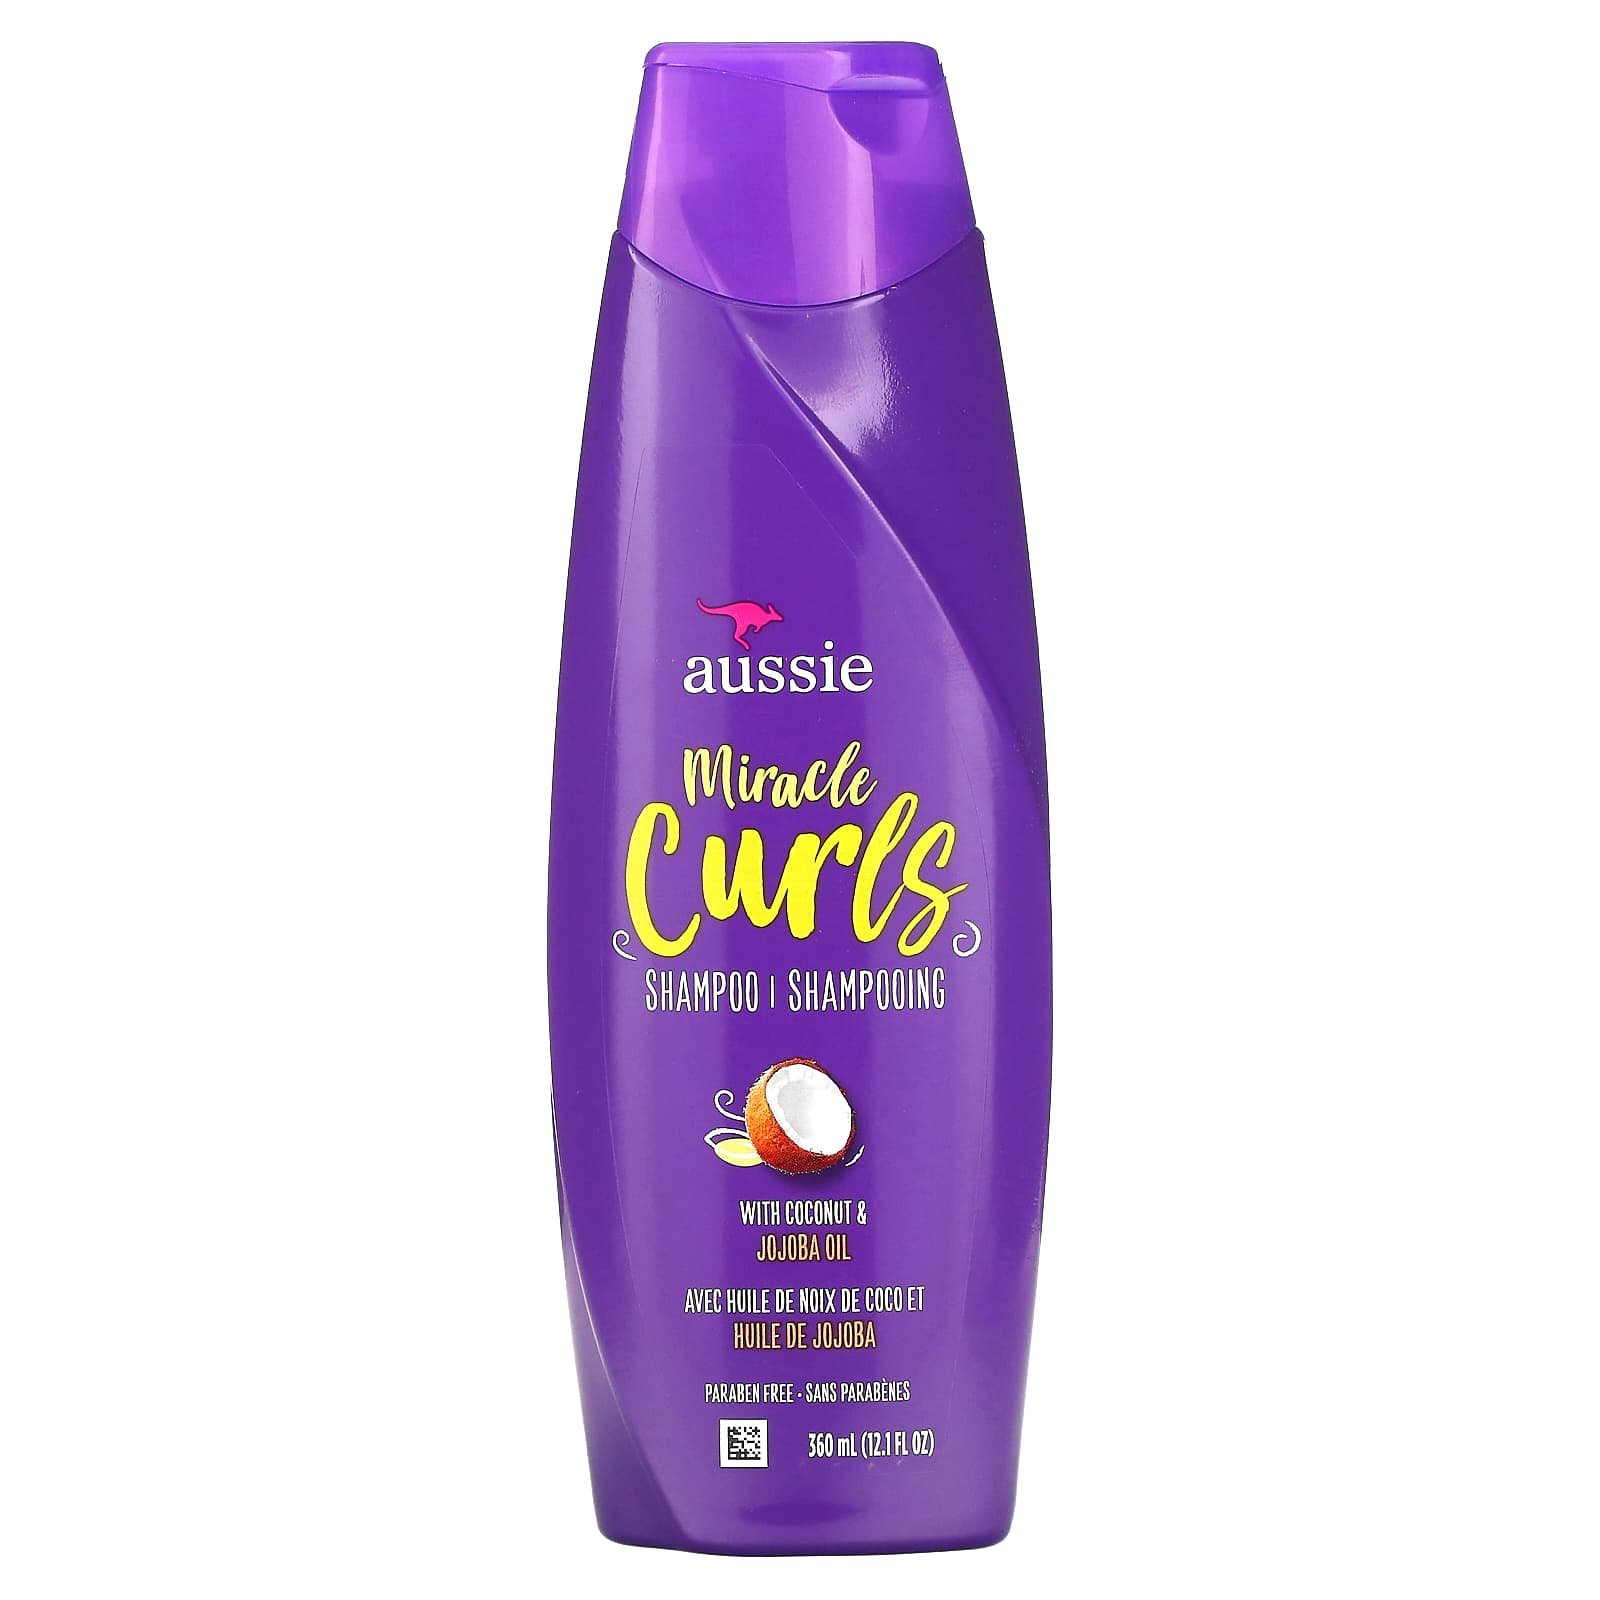 Aussie Miracle Curls Shampoo Price